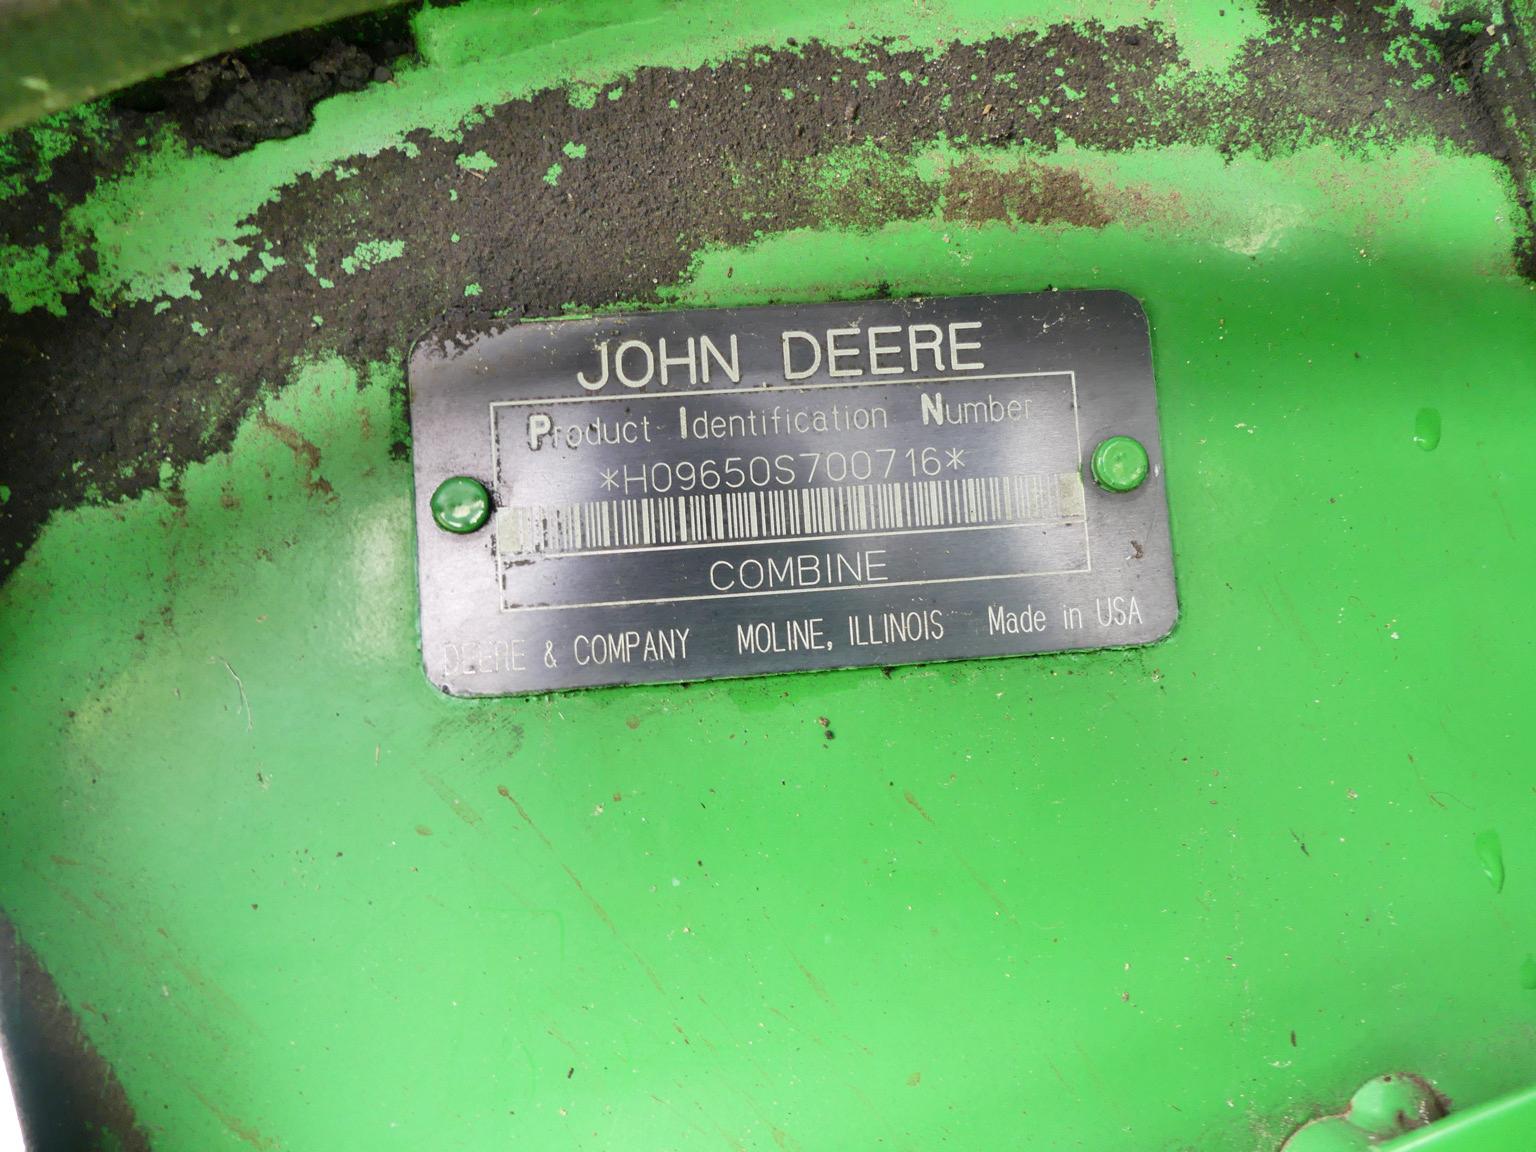 John Deere 9650 STS Combine, s/n H09650S700716: Meter Shows 3298 Separator